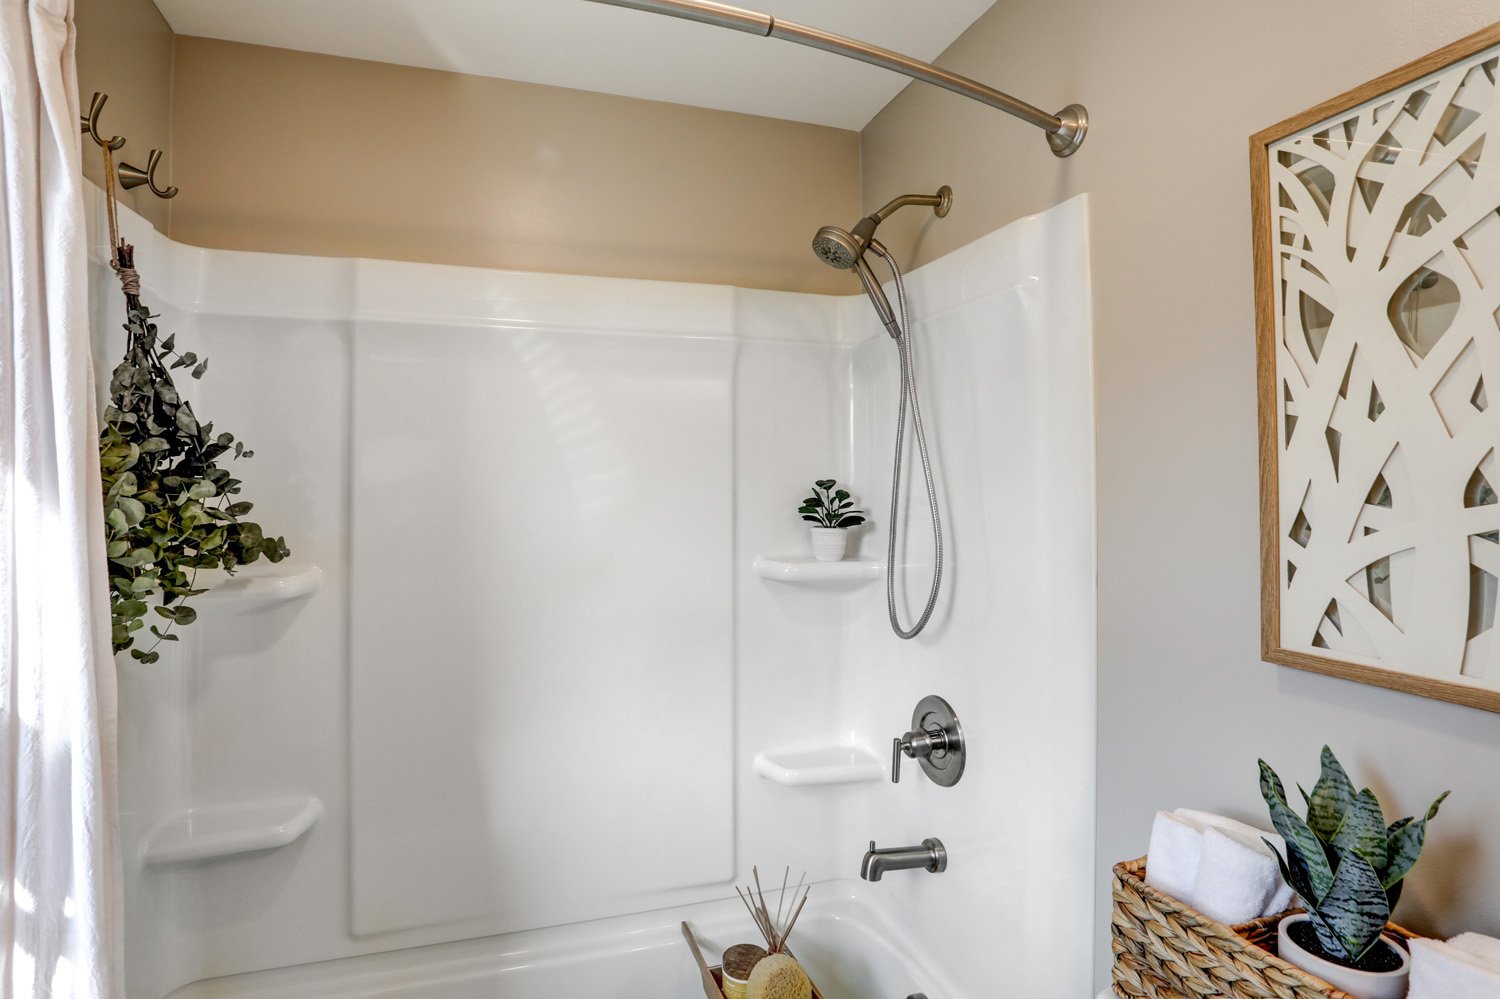 Shower and bath tub combination in Manheim Township Bathroom Remodel 